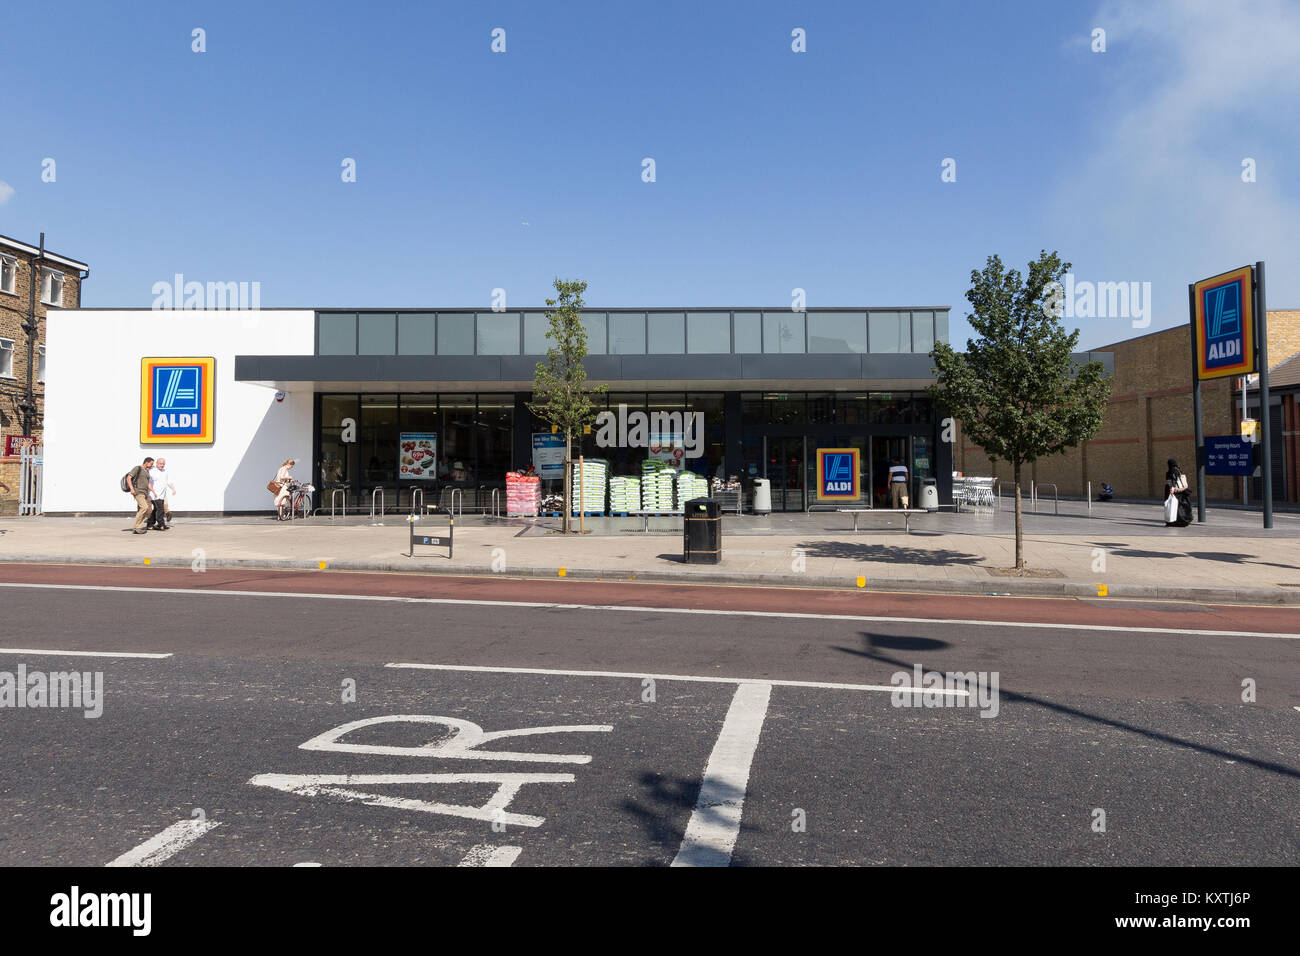 Aldi supermarket, Tottenham, London Stock Photo